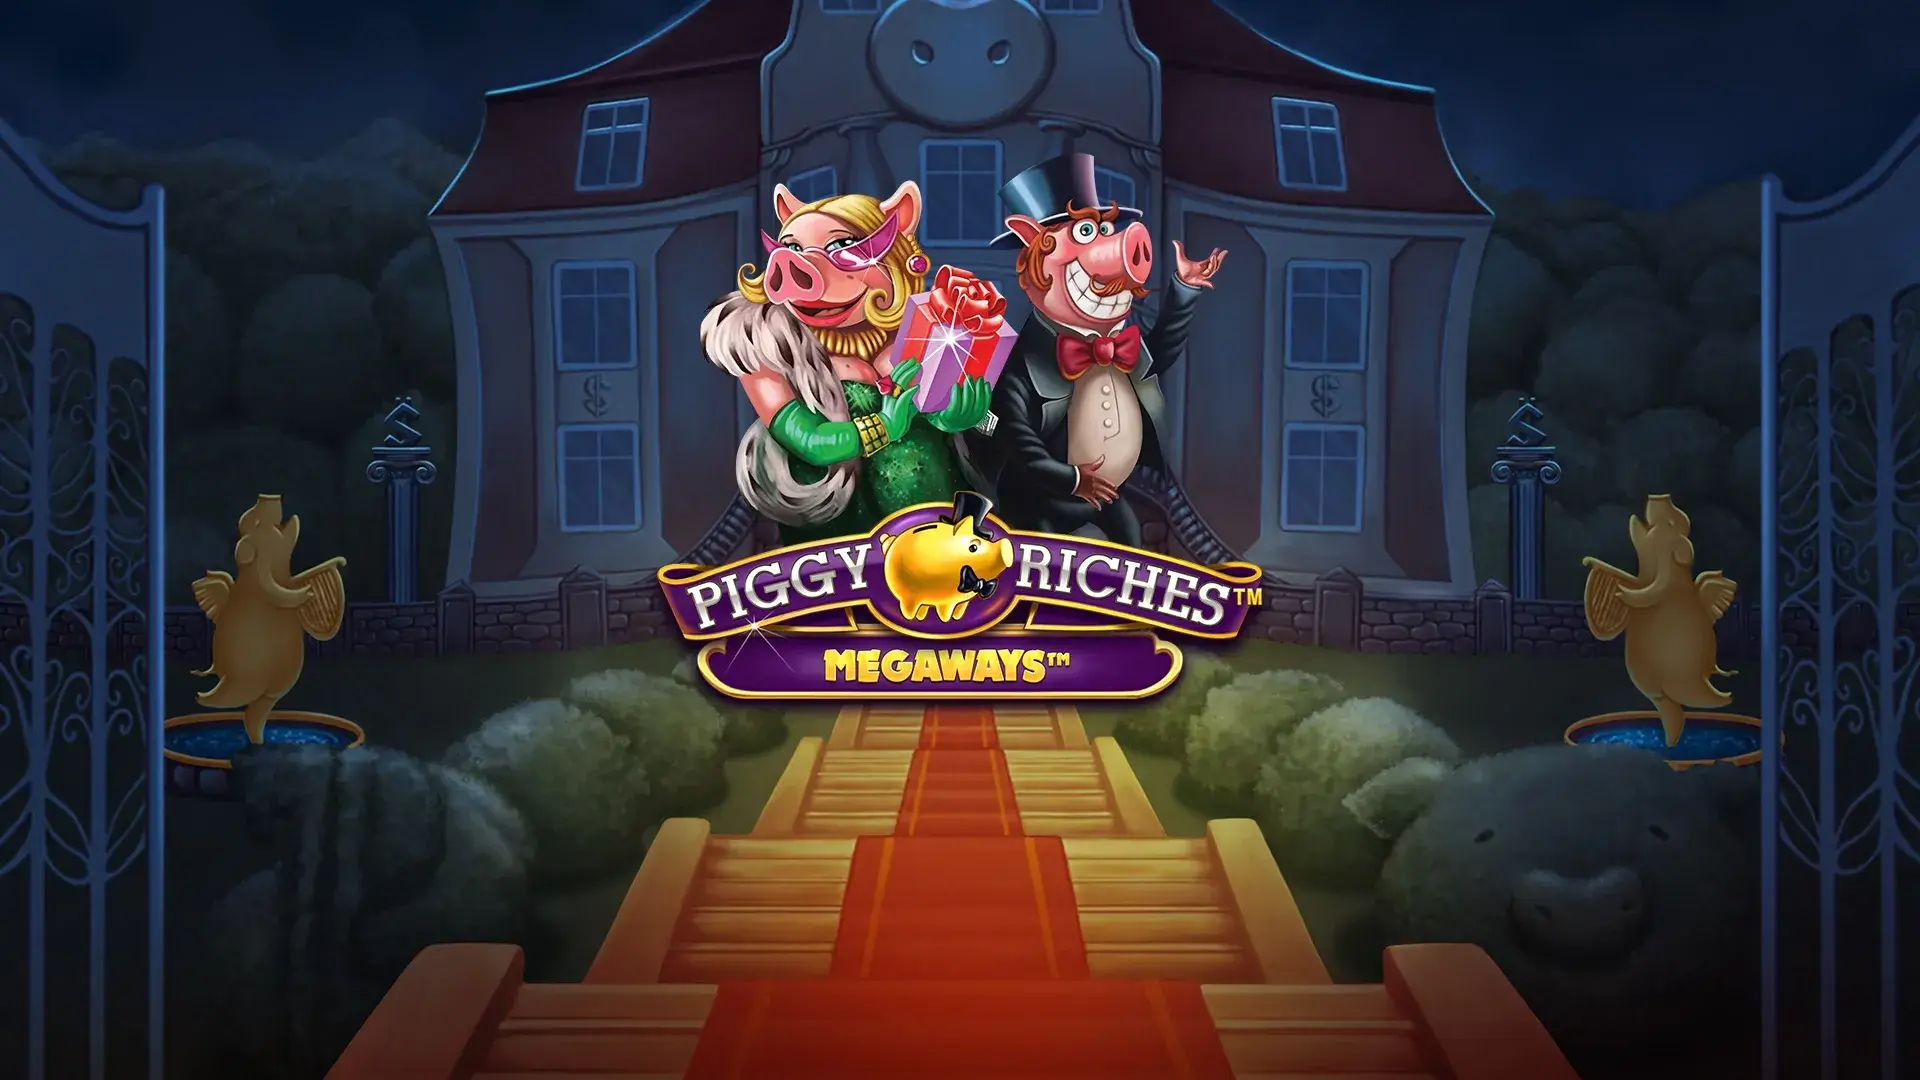 Piggy Riches Megaways Red Tiger Provider Review UAE - UAE Casinos - Emirates Casino 